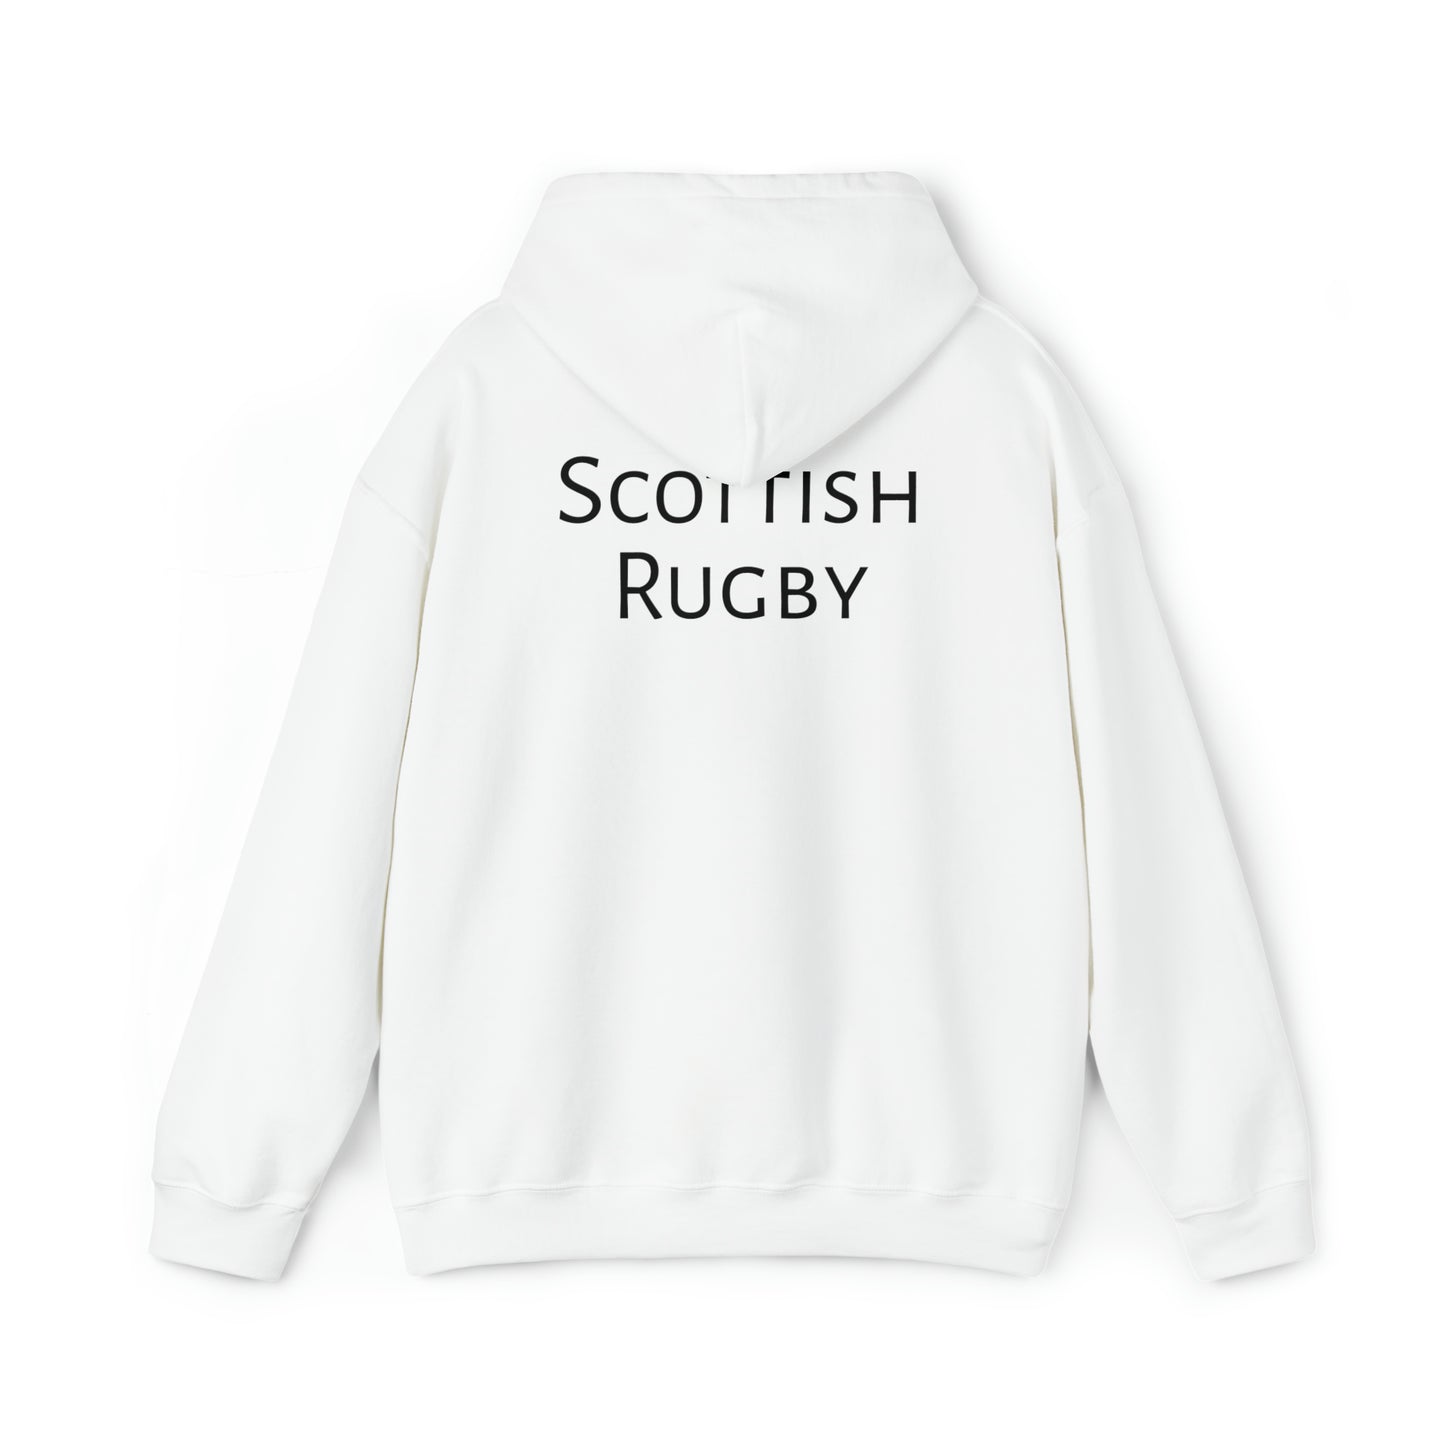 Celebrating Scotland - light hoodies